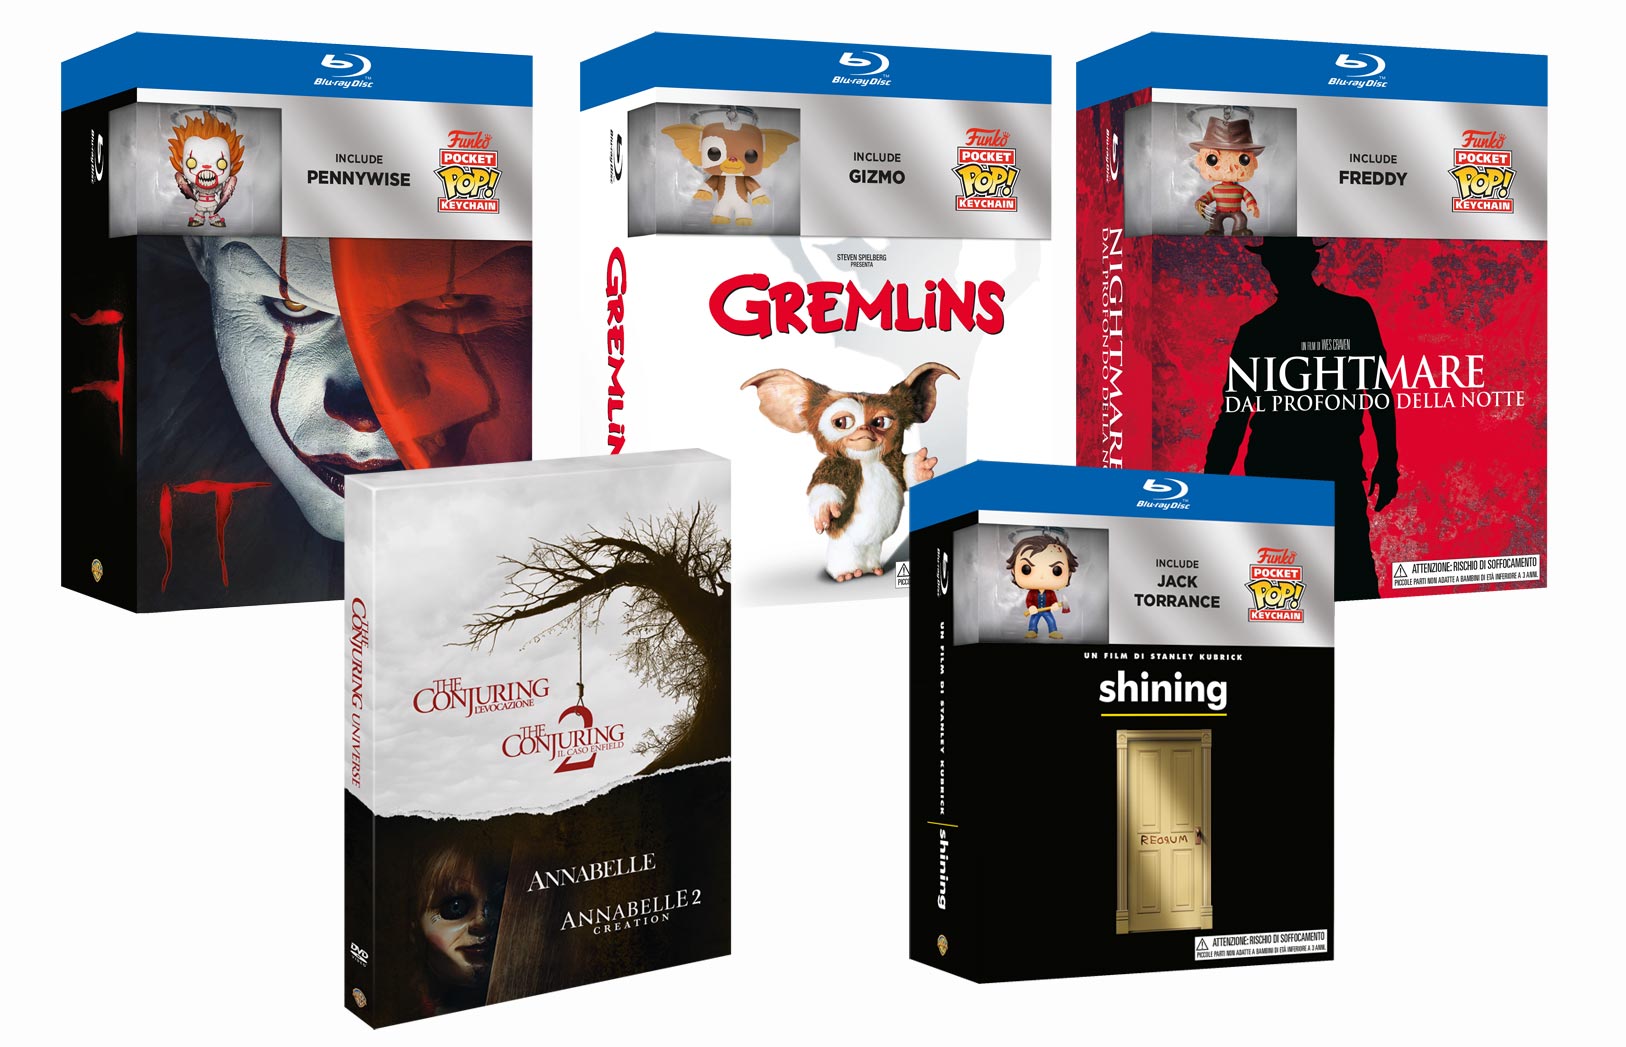 Gremlins, Shining, Nightmare, IT e The Conjuring Universe: i cofanetti DVD e Blu-ray Warner per Halloween 2018